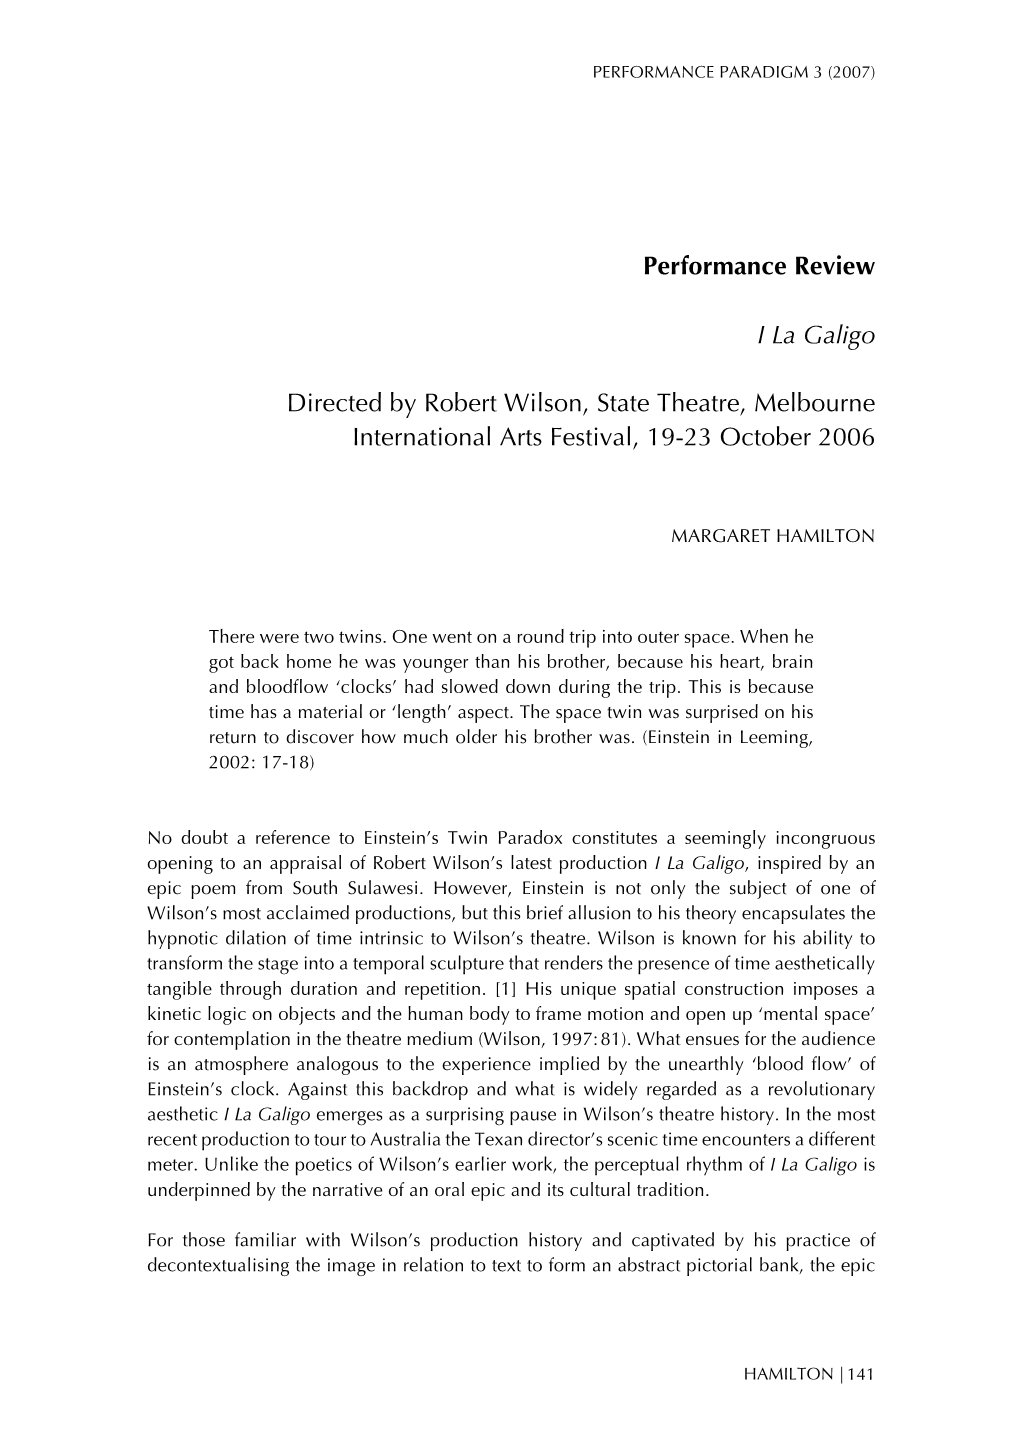 Performance Review I La Galigo Directed by Robert Wilson, State